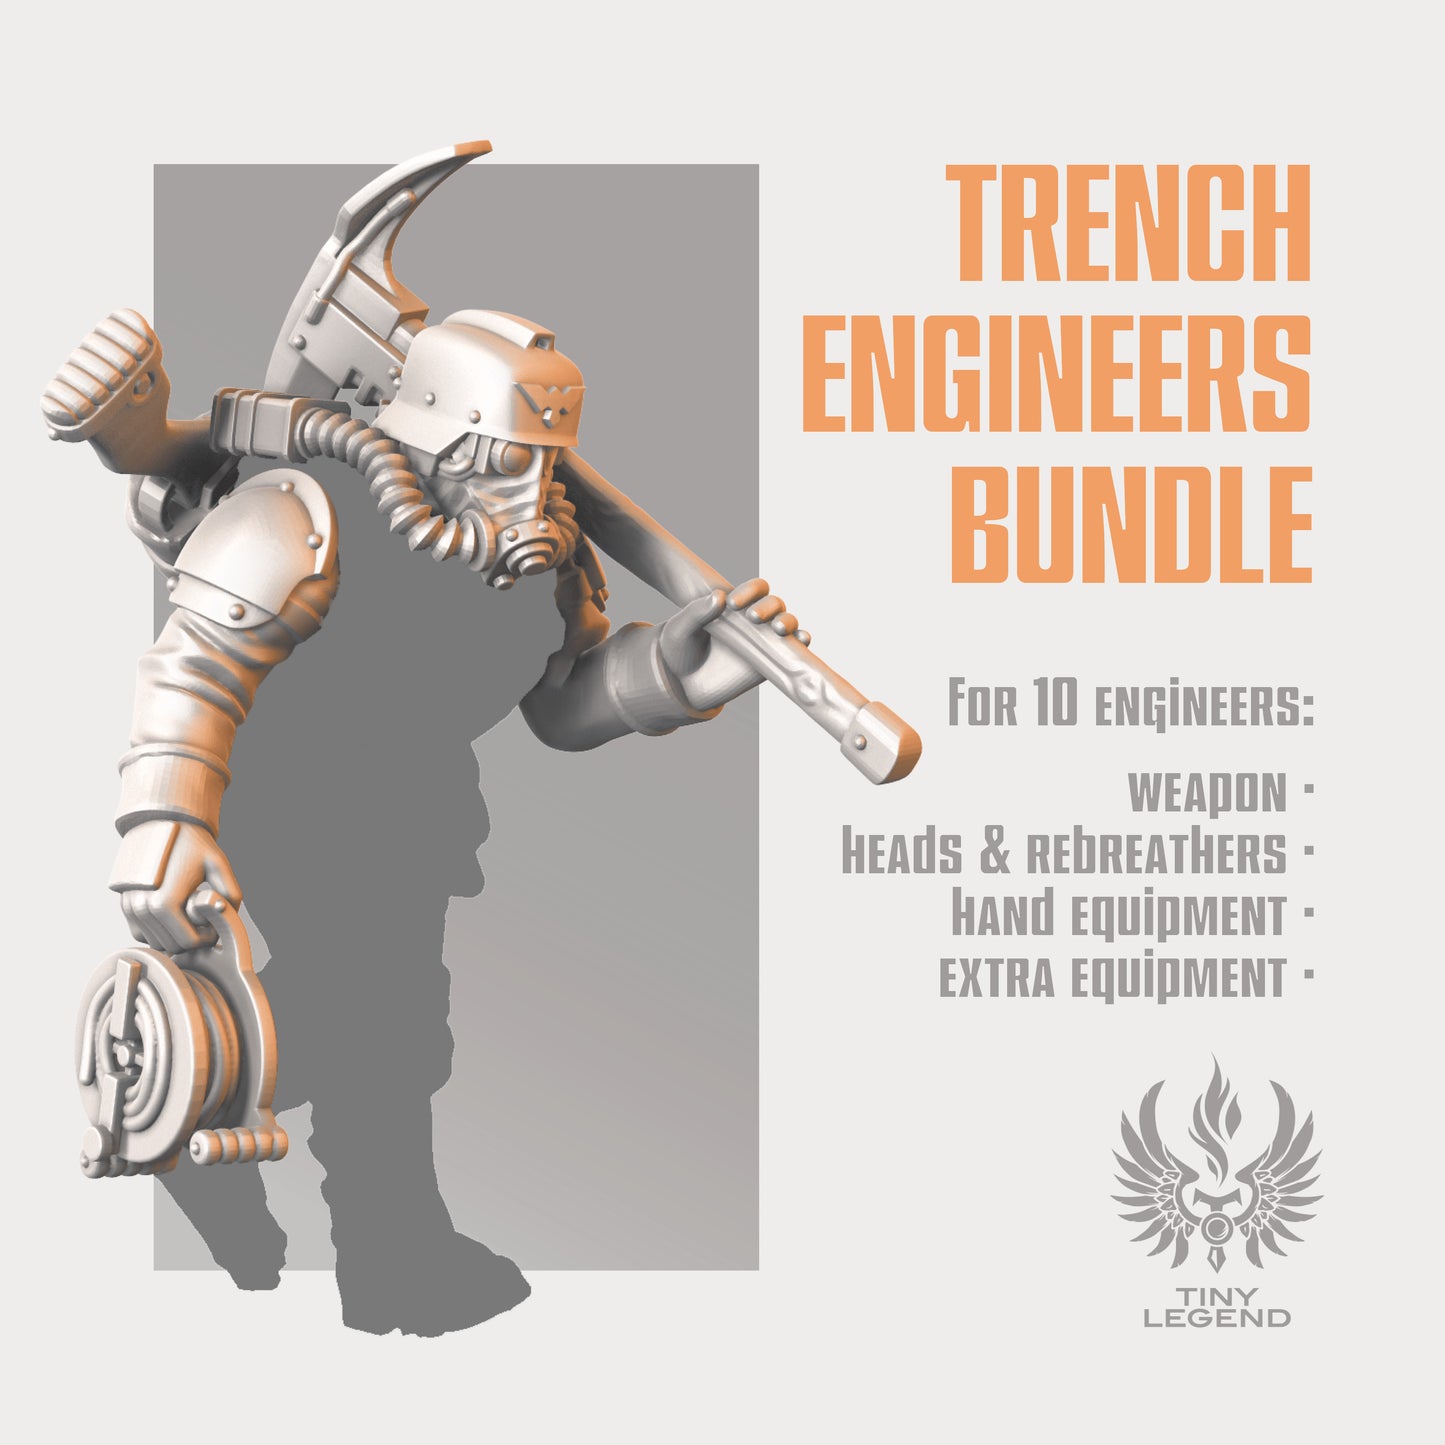 Trench engineers bundle